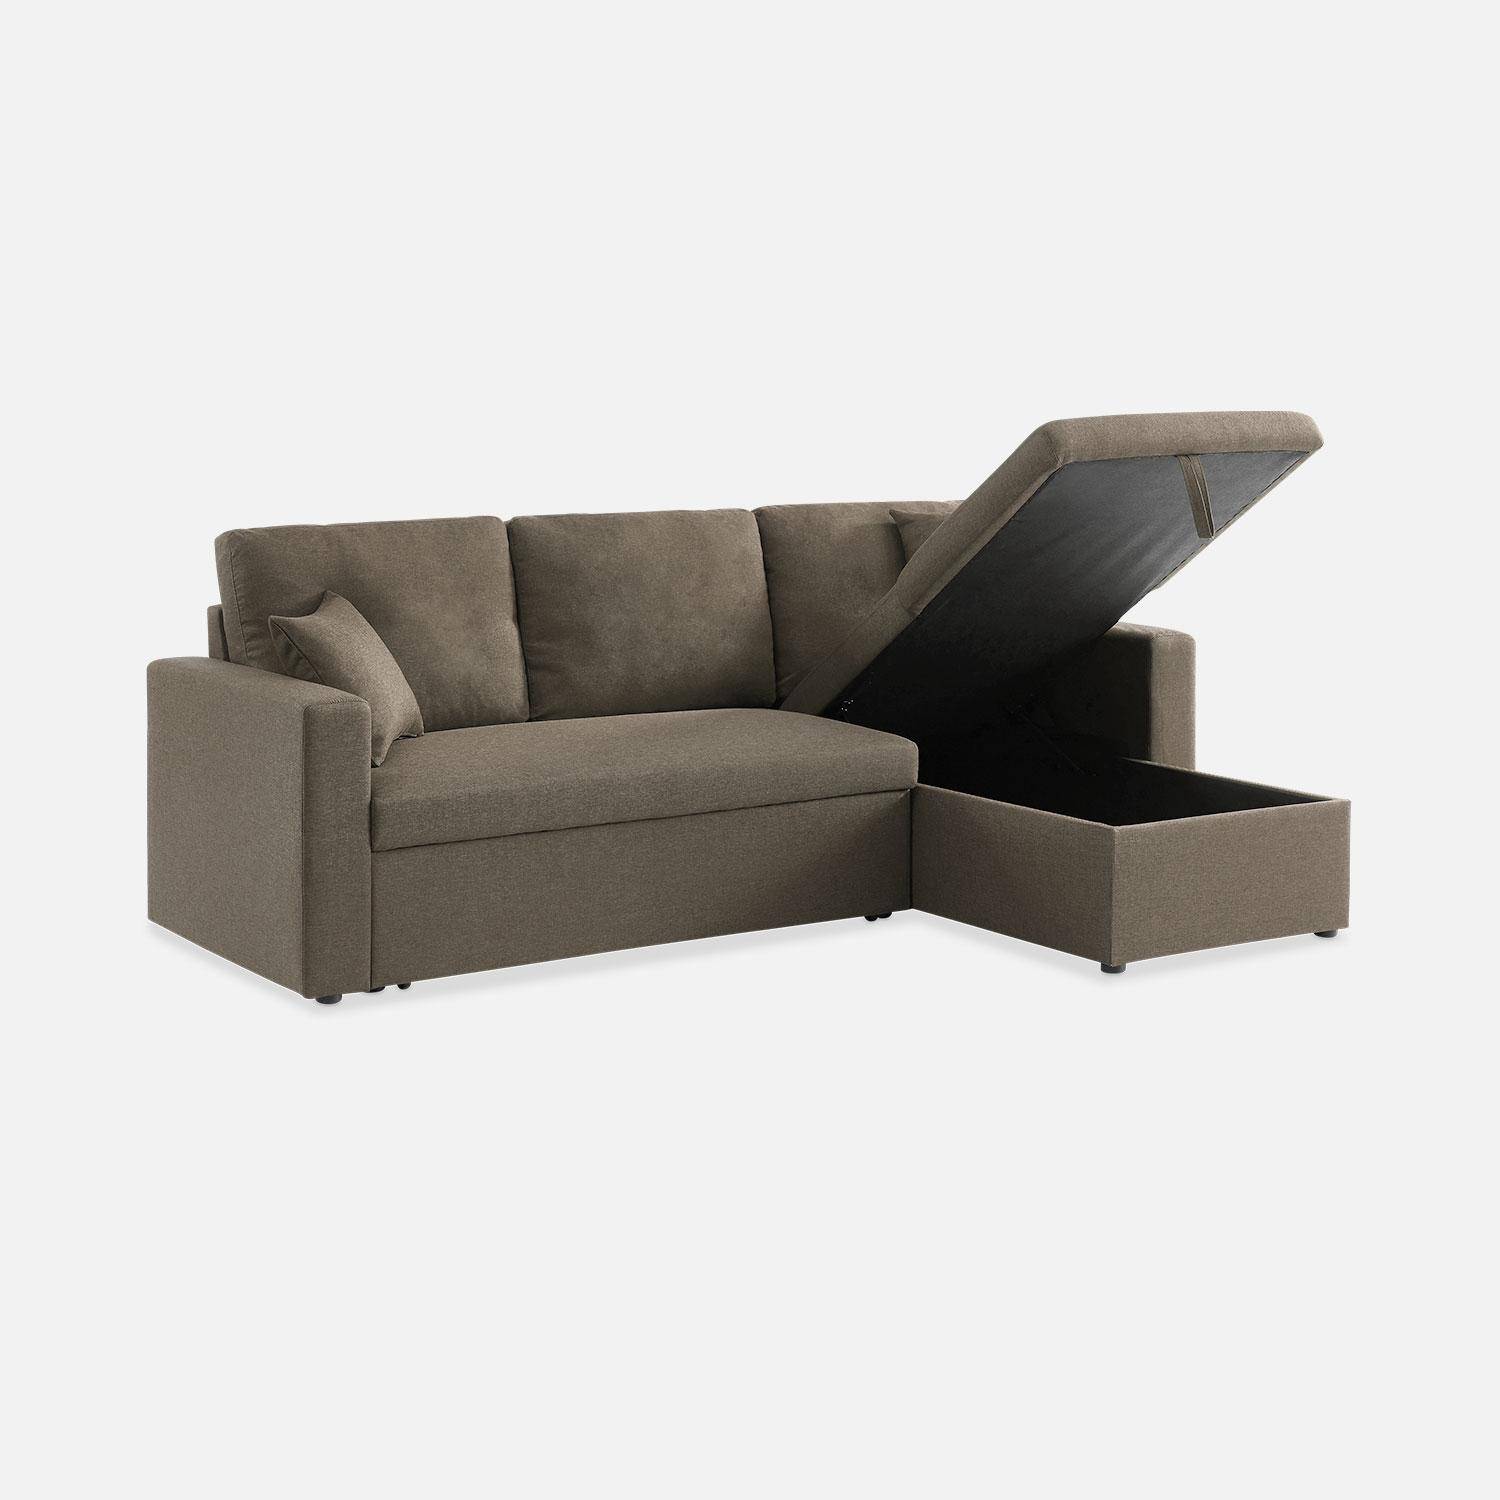 3-seater reversible brown corner sofa bed with storage box, brown, L219xD81xH68cm, IDA,sweeek,Photo8